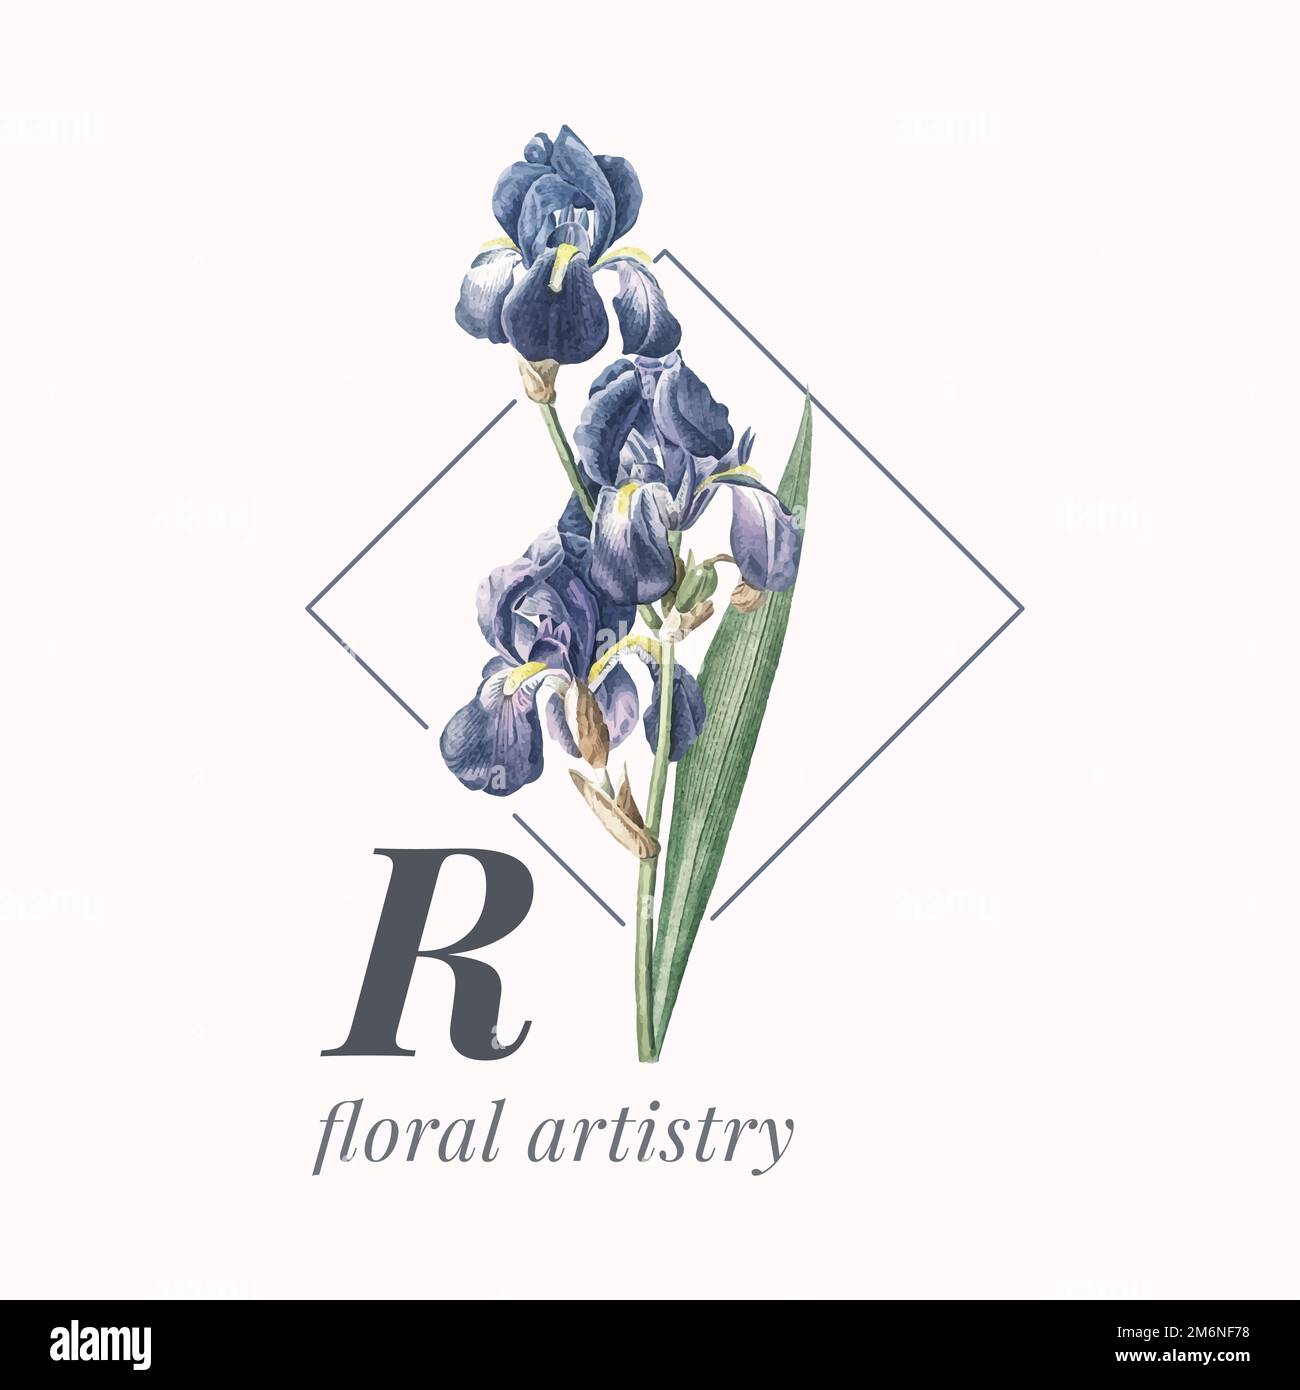 R floral artistry logo vector Stock Vector